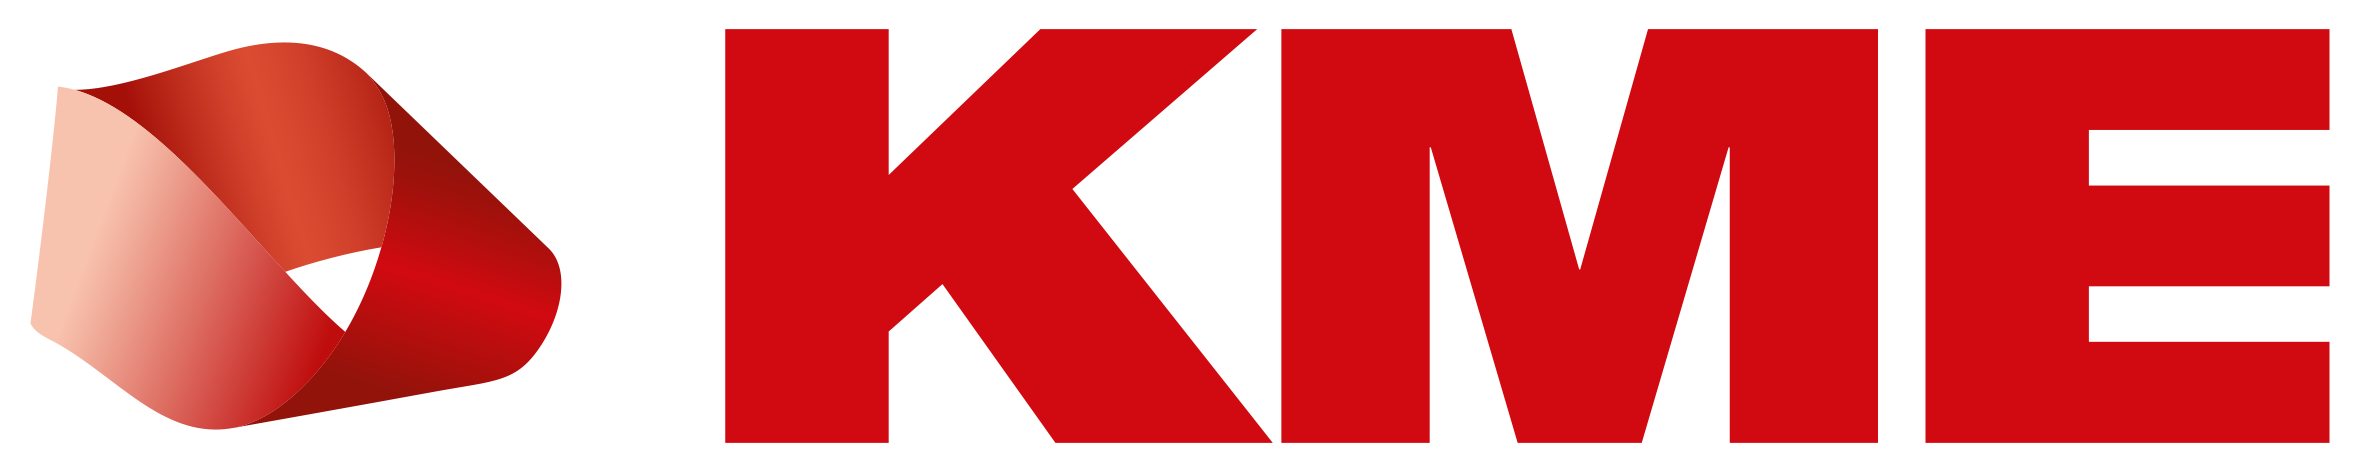 ES-klant-kme-logo